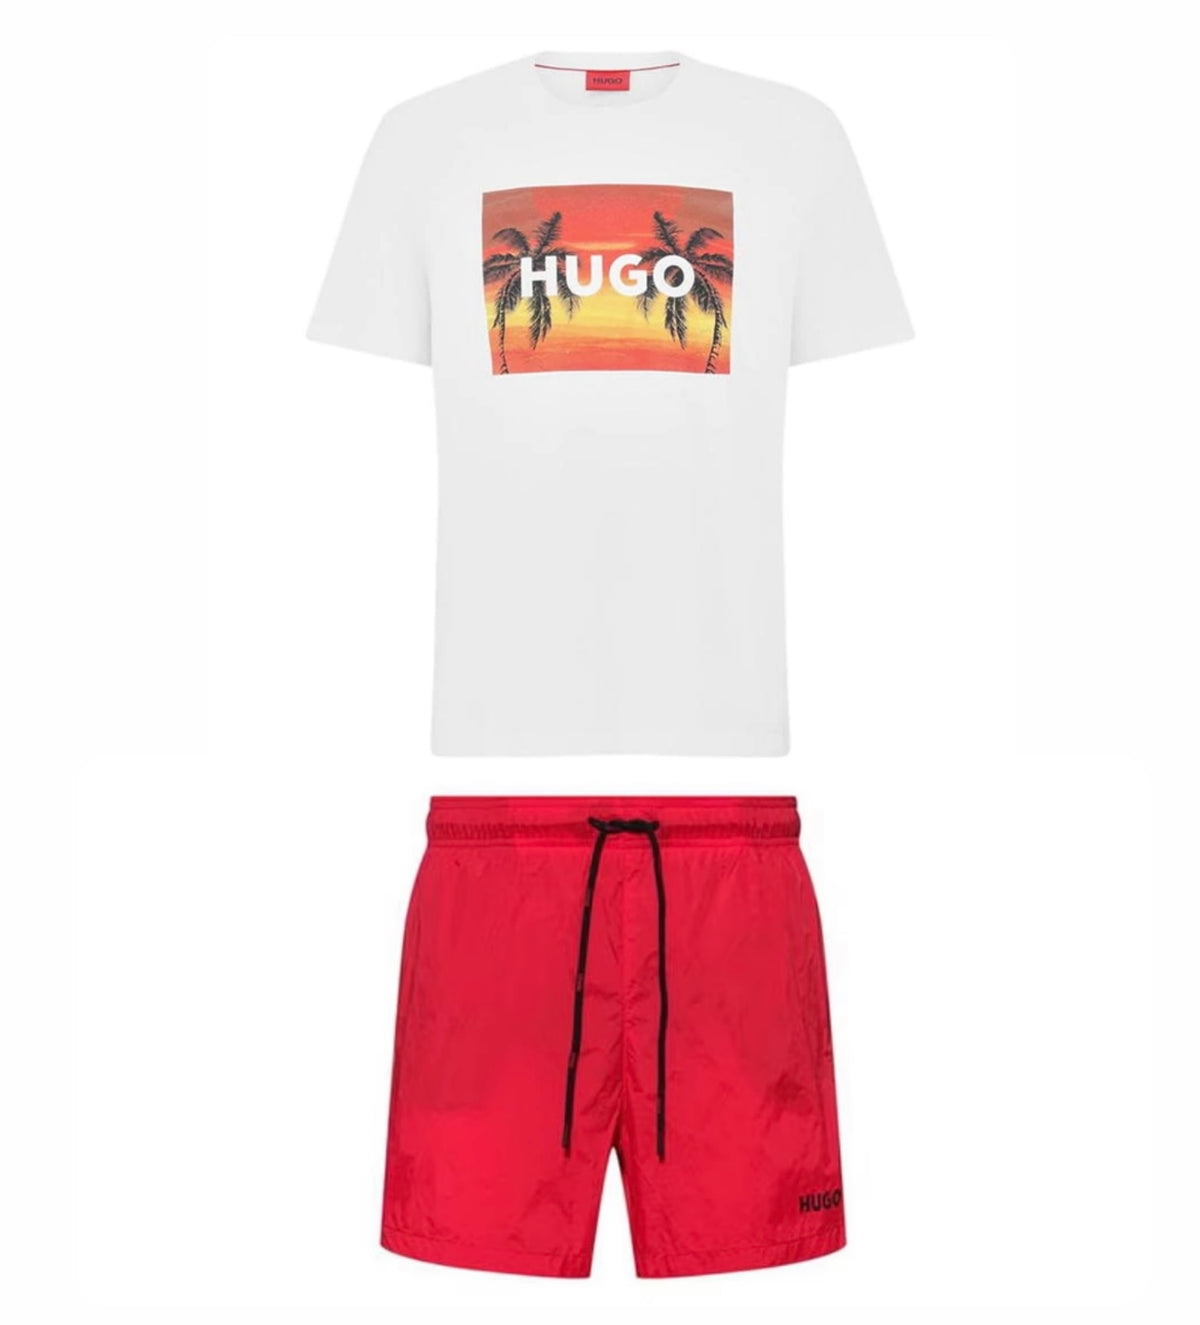 HUGO BOSS HUGO SUNSET T-SHIRT & SWIM SHORTS SET WHITE / RED